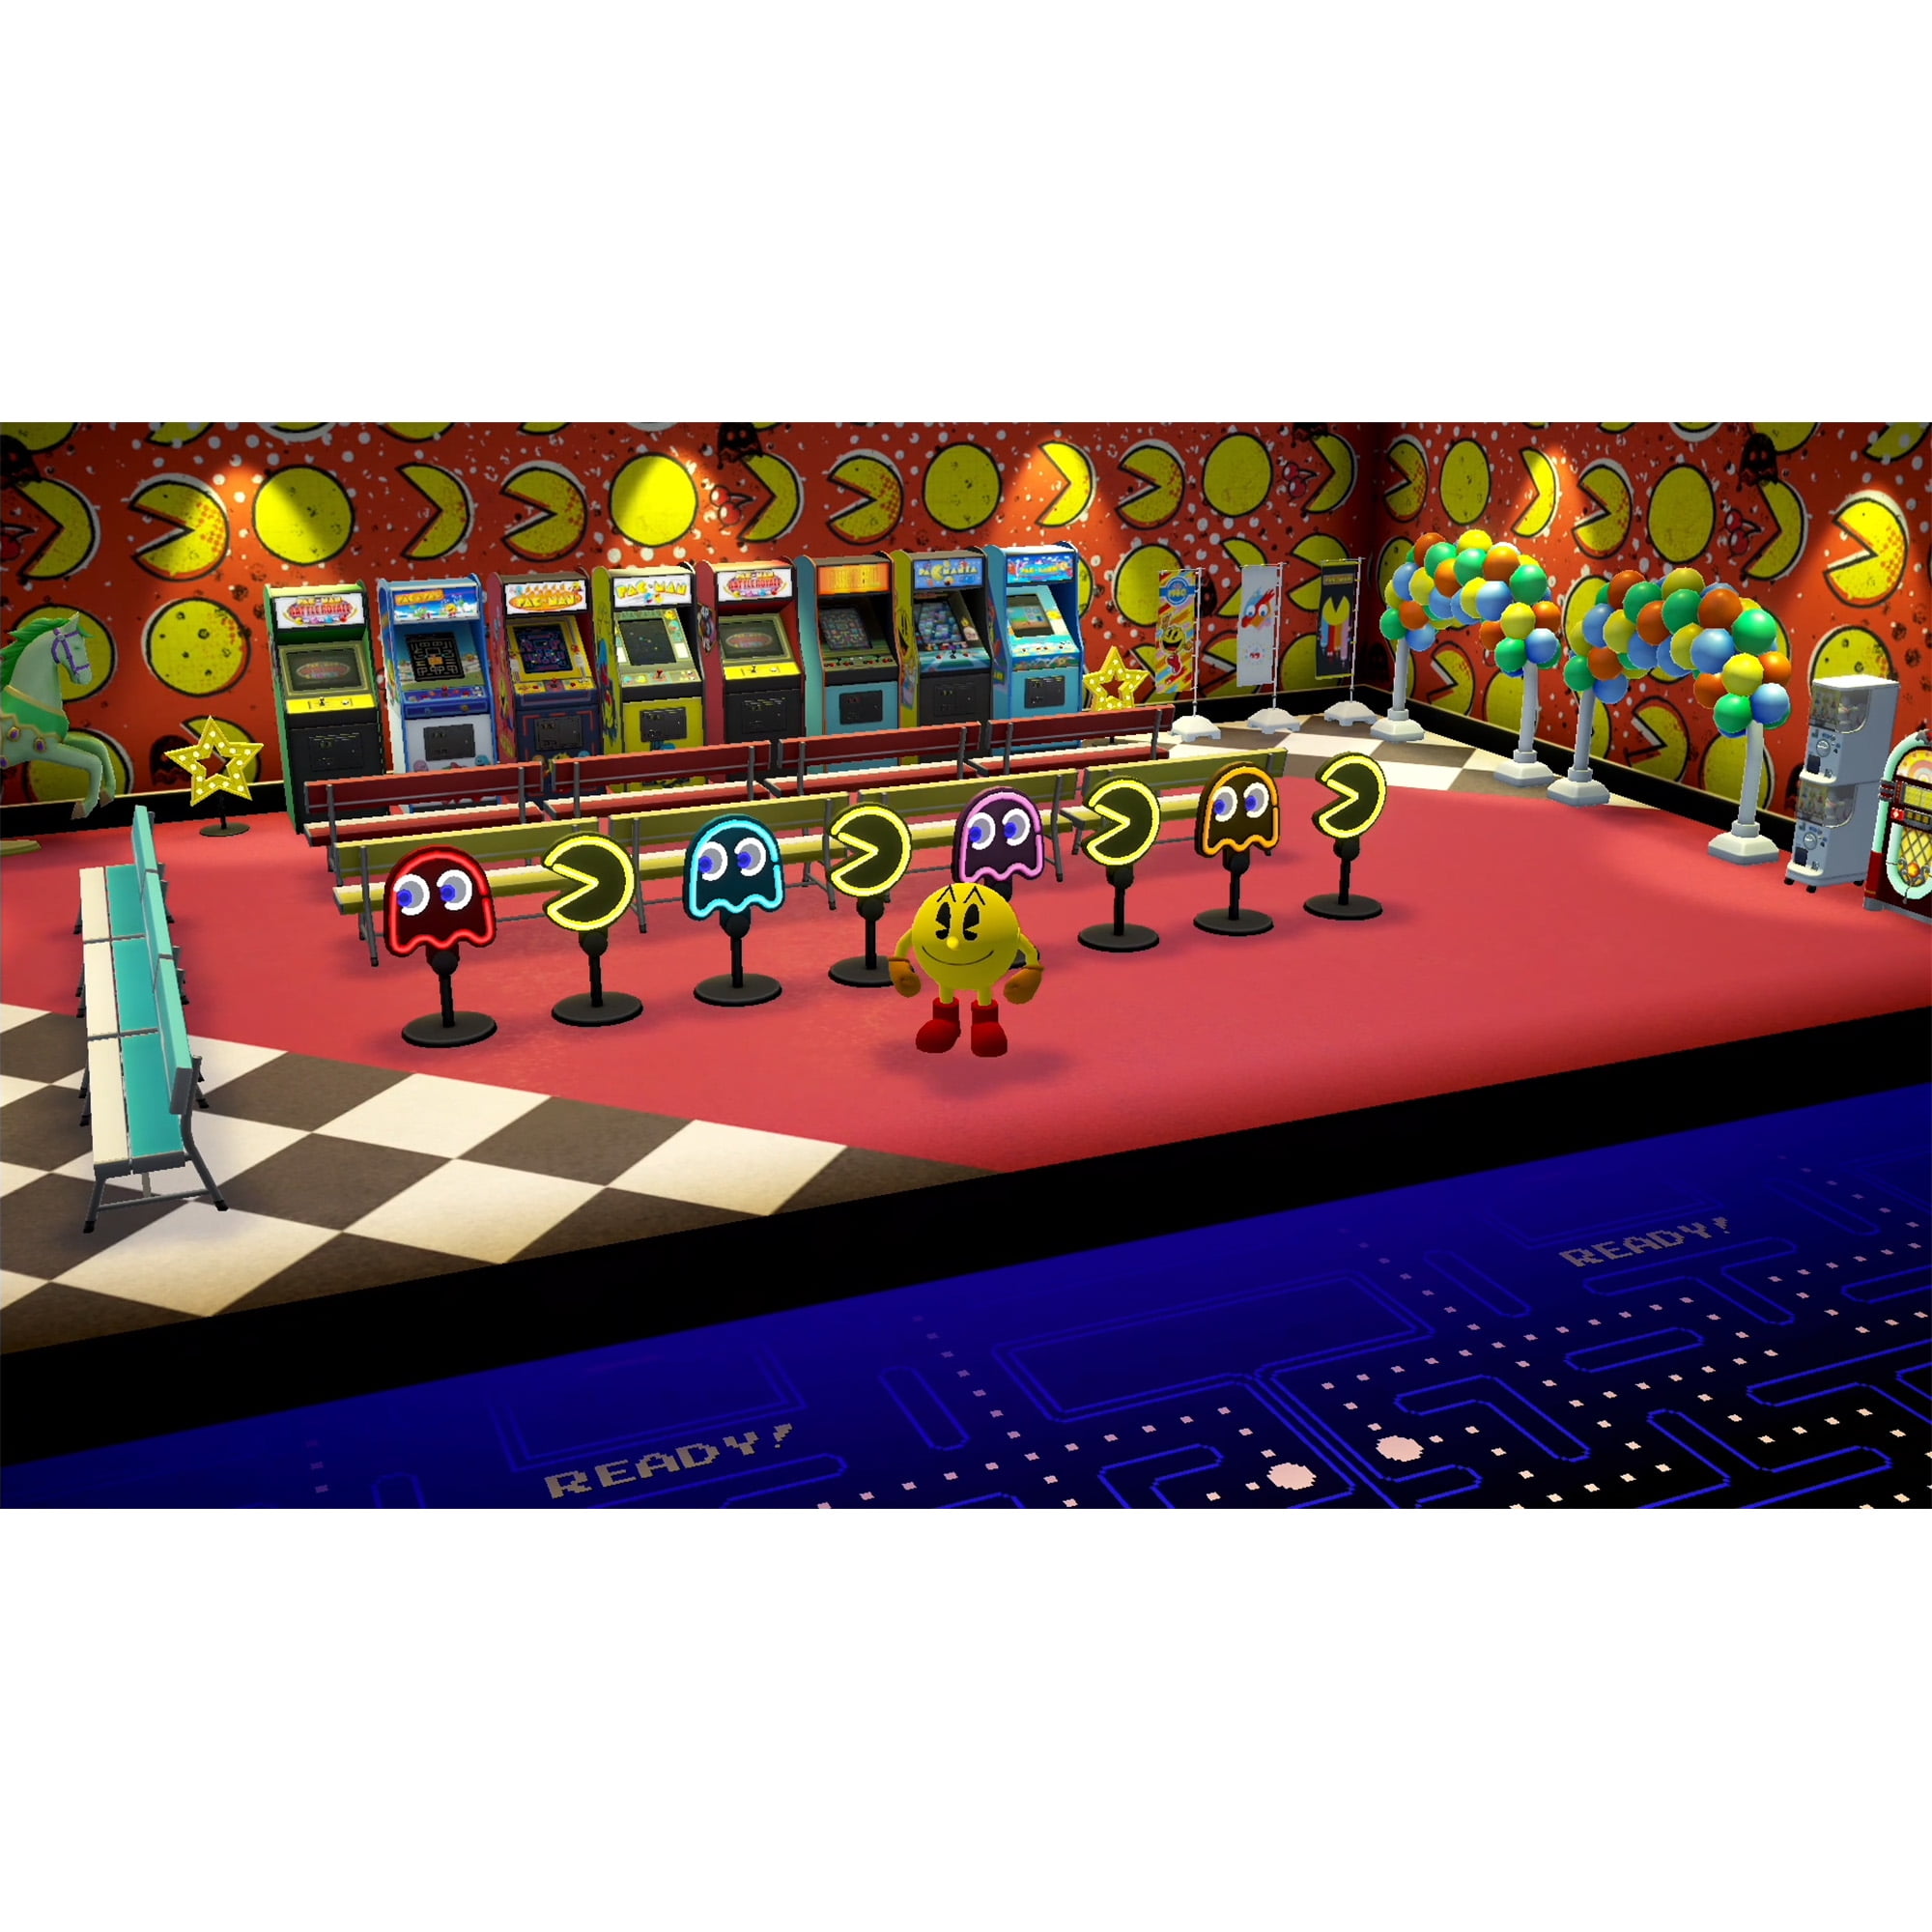 Pac-Man Museum+ Includes 14 Classics & a Customizable Arcade Hub